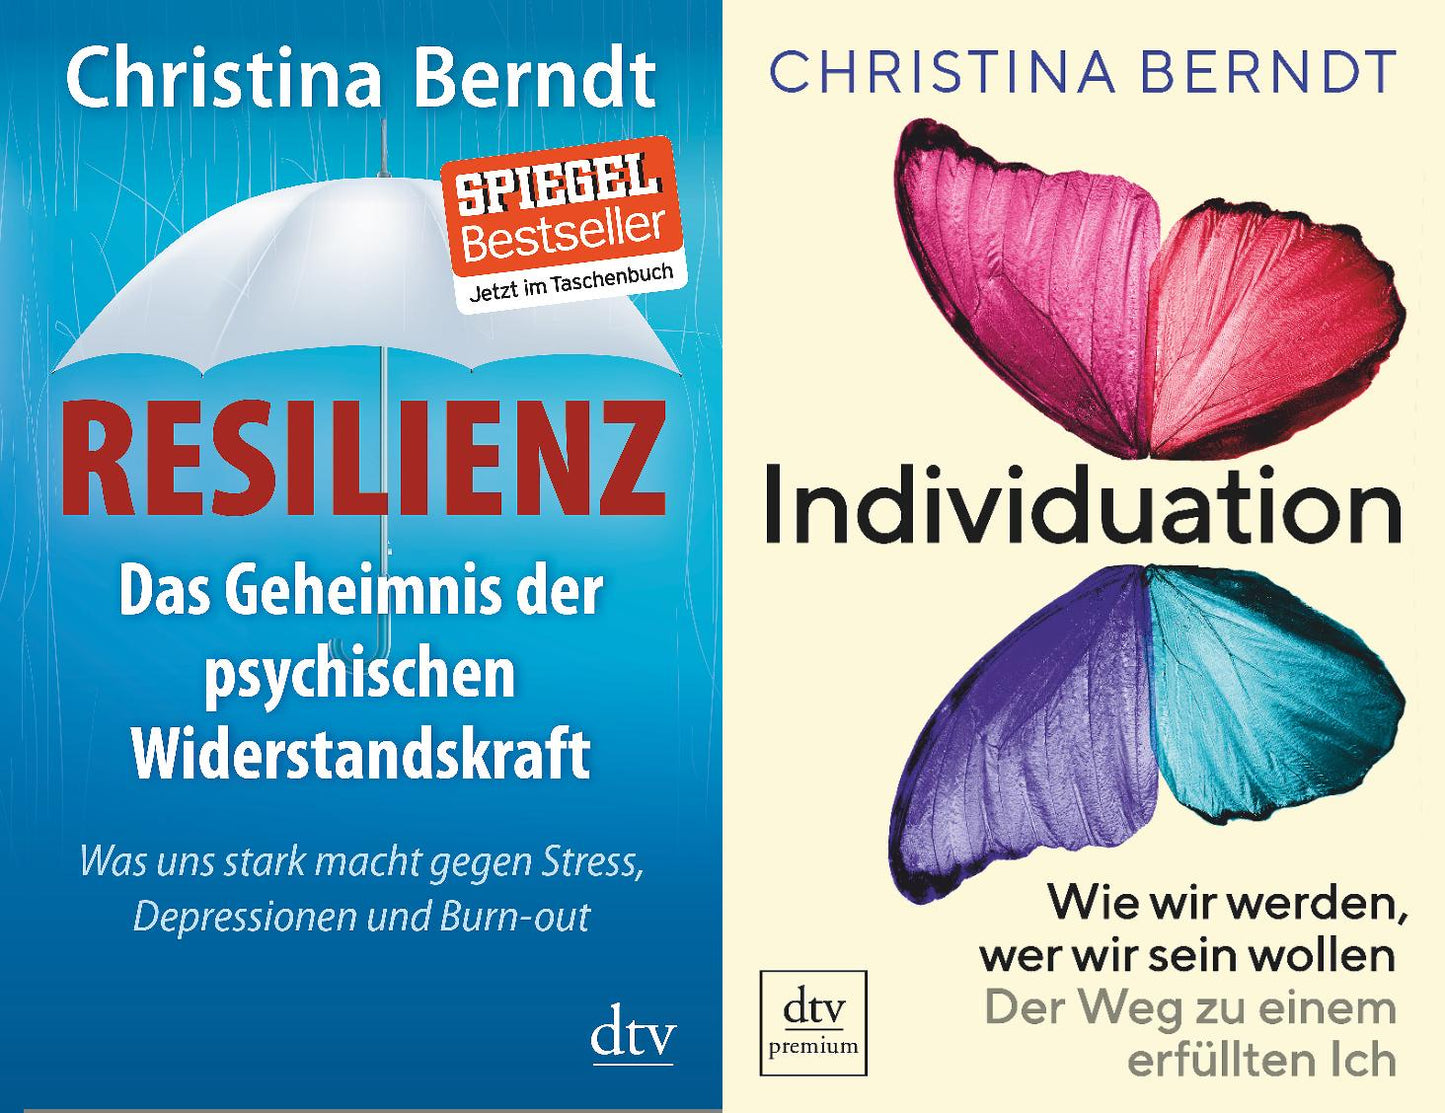 Resilienz + Individuation von Christina Berndt im Set plus 1 exklusives Postkartenset